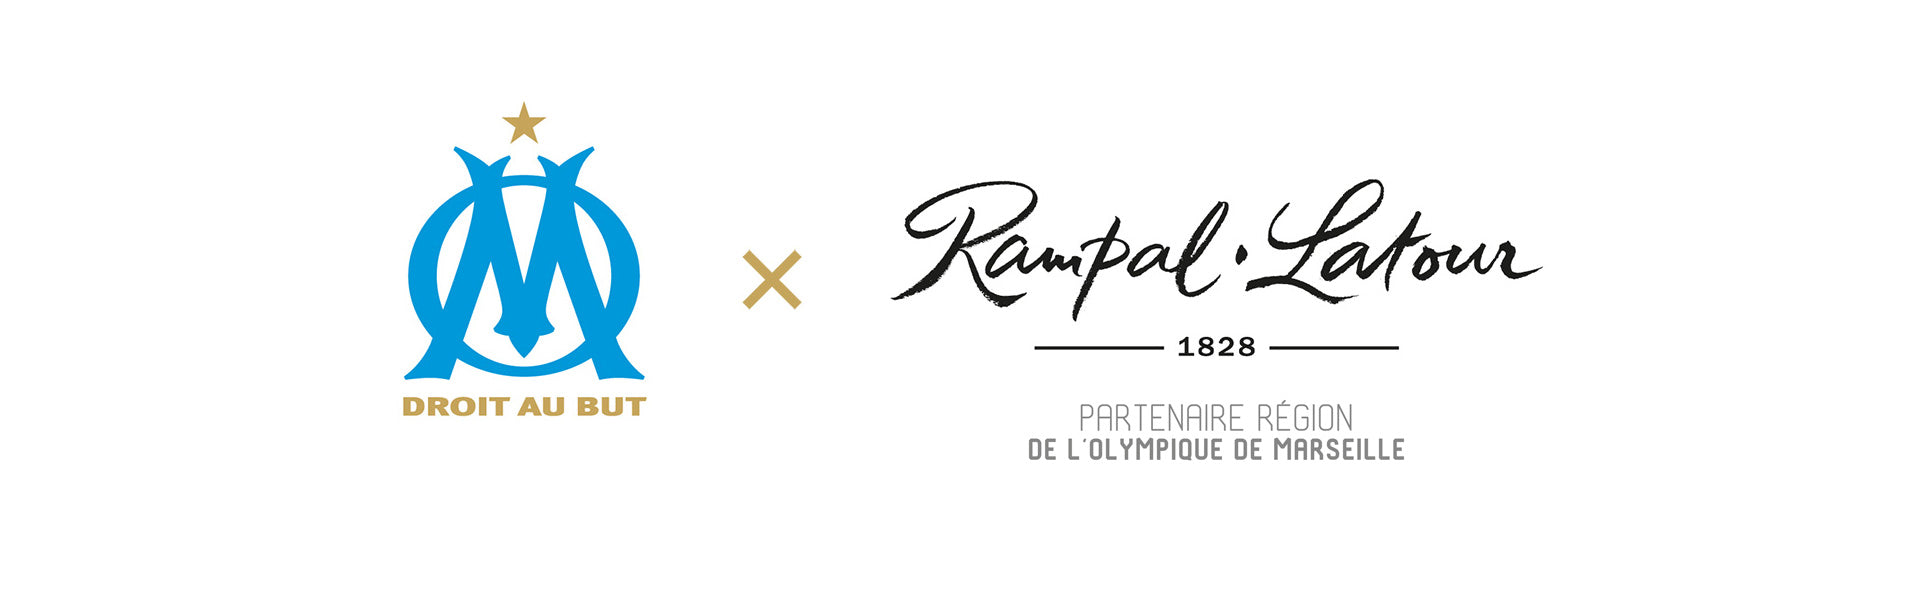 Rampal Latour x Olympique de Marseille